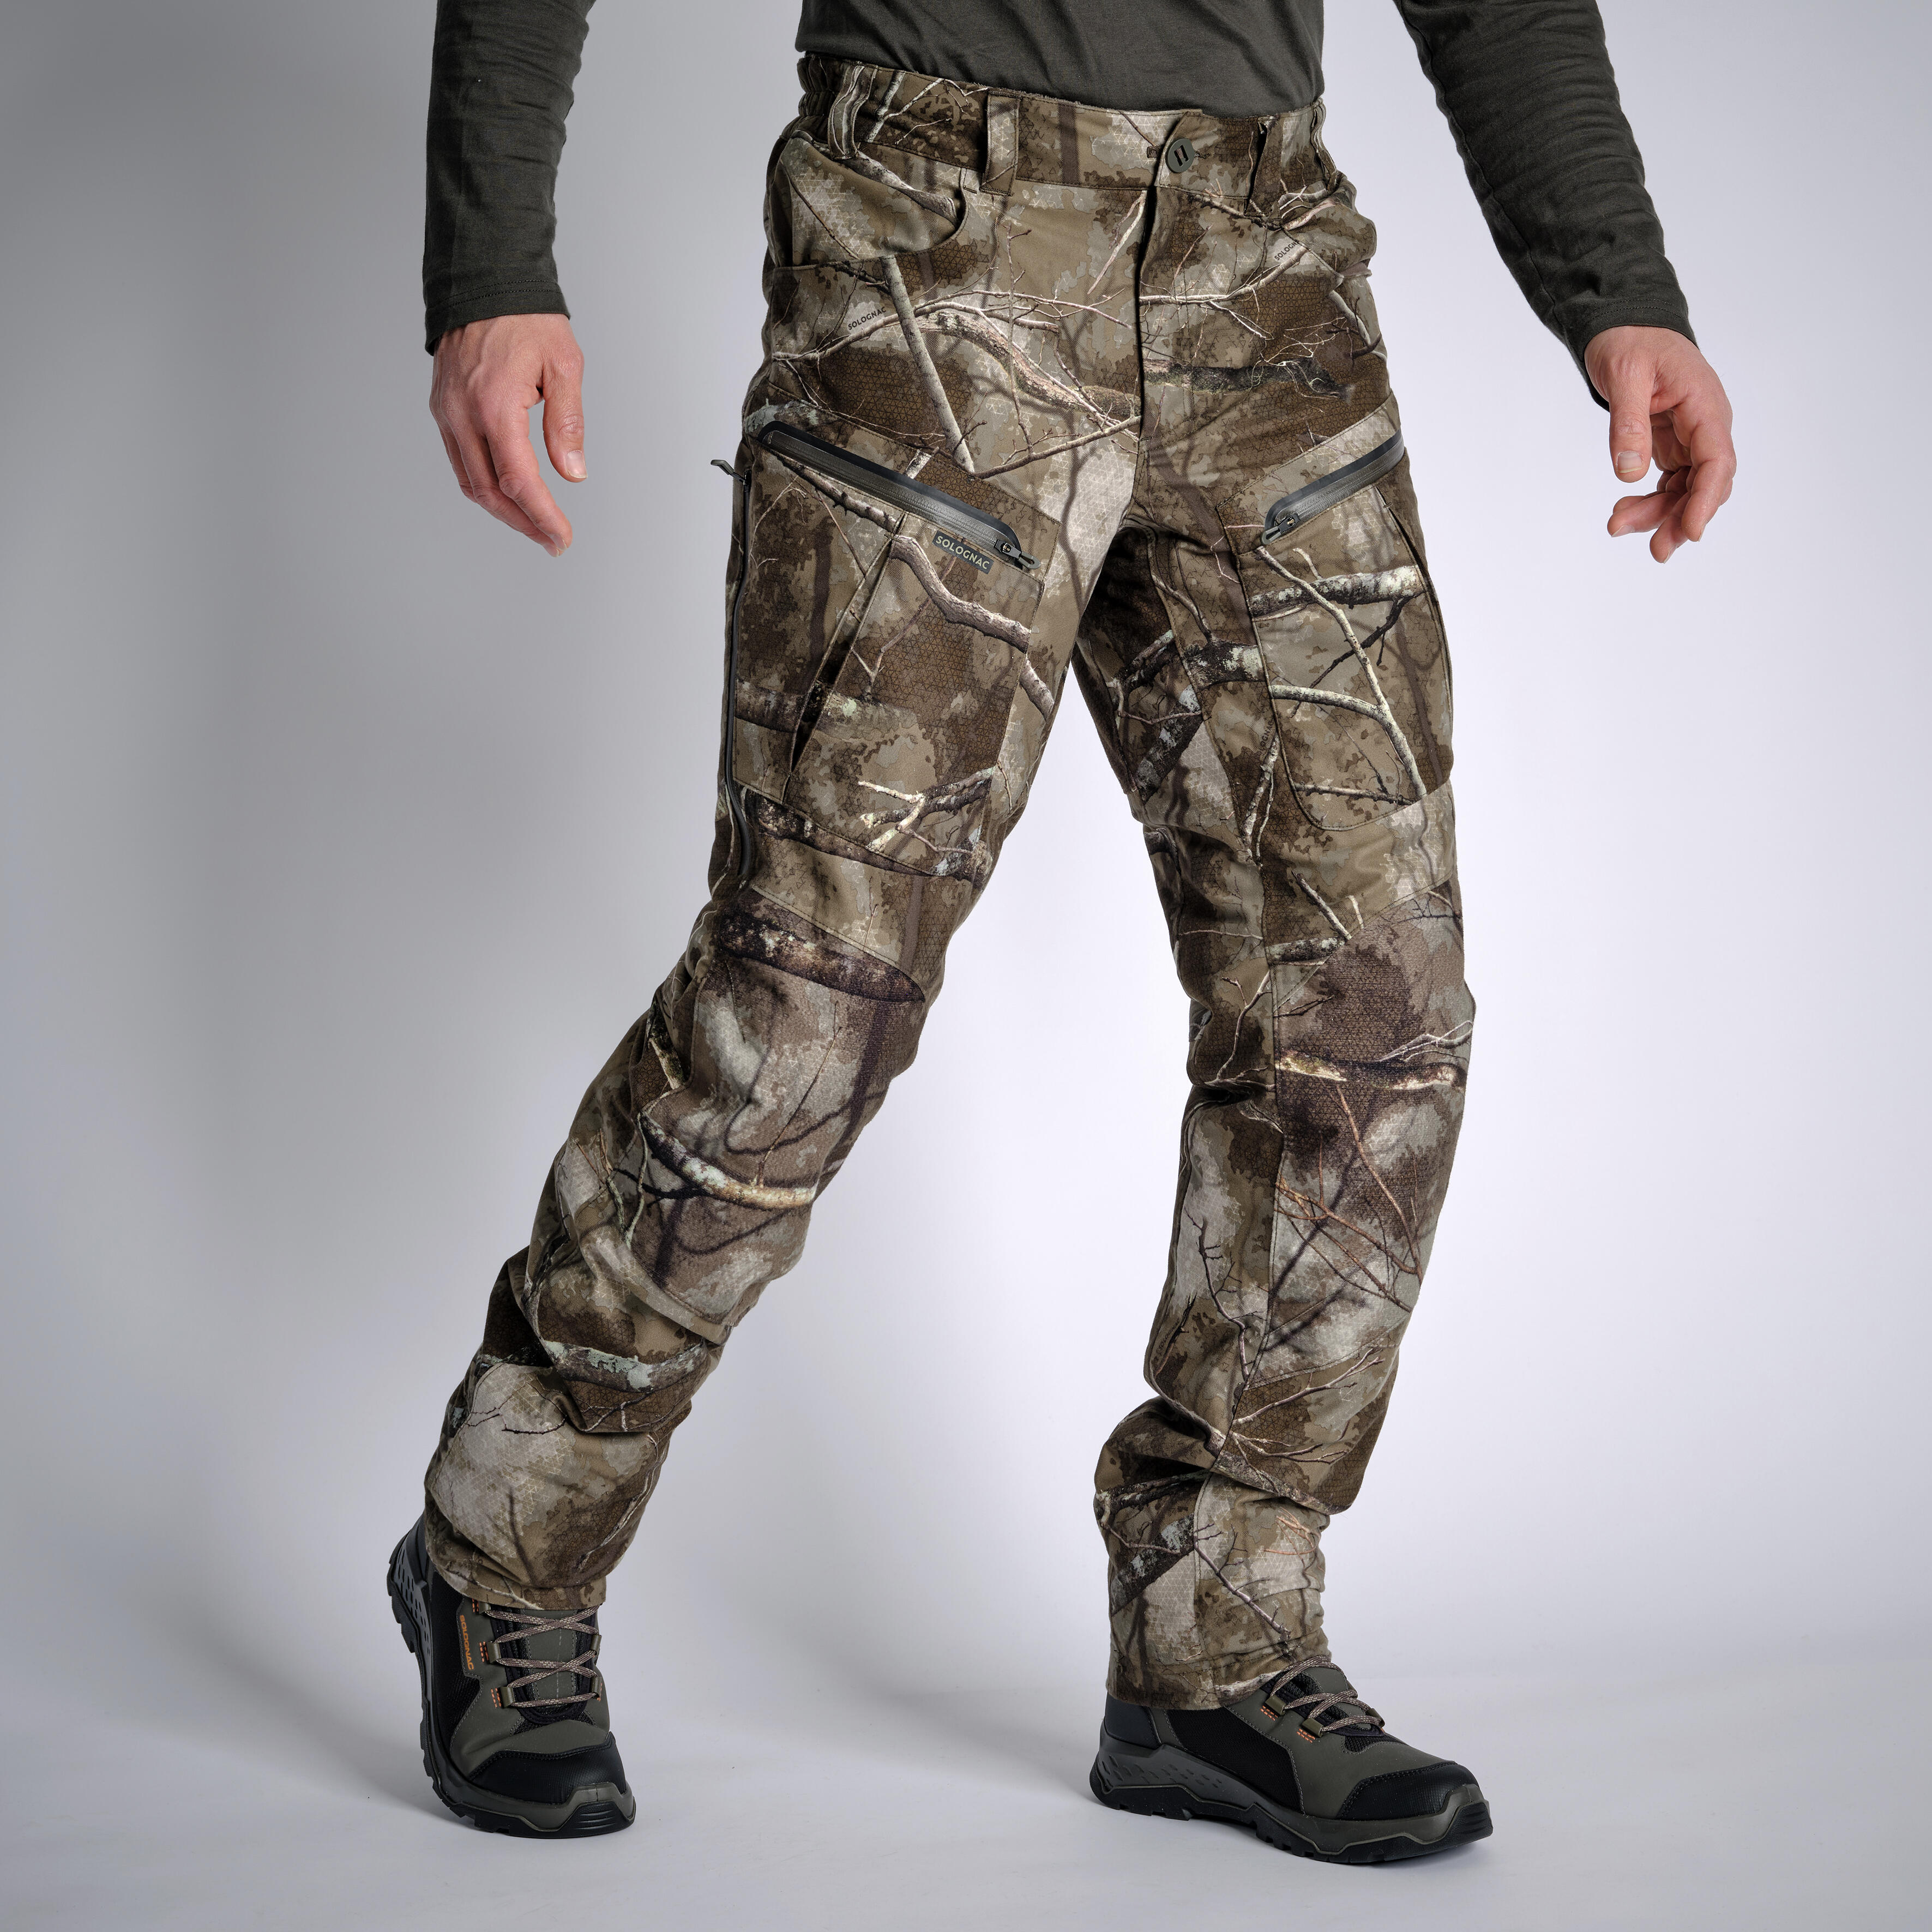 900 silent warm waterproof hunting trousers camo